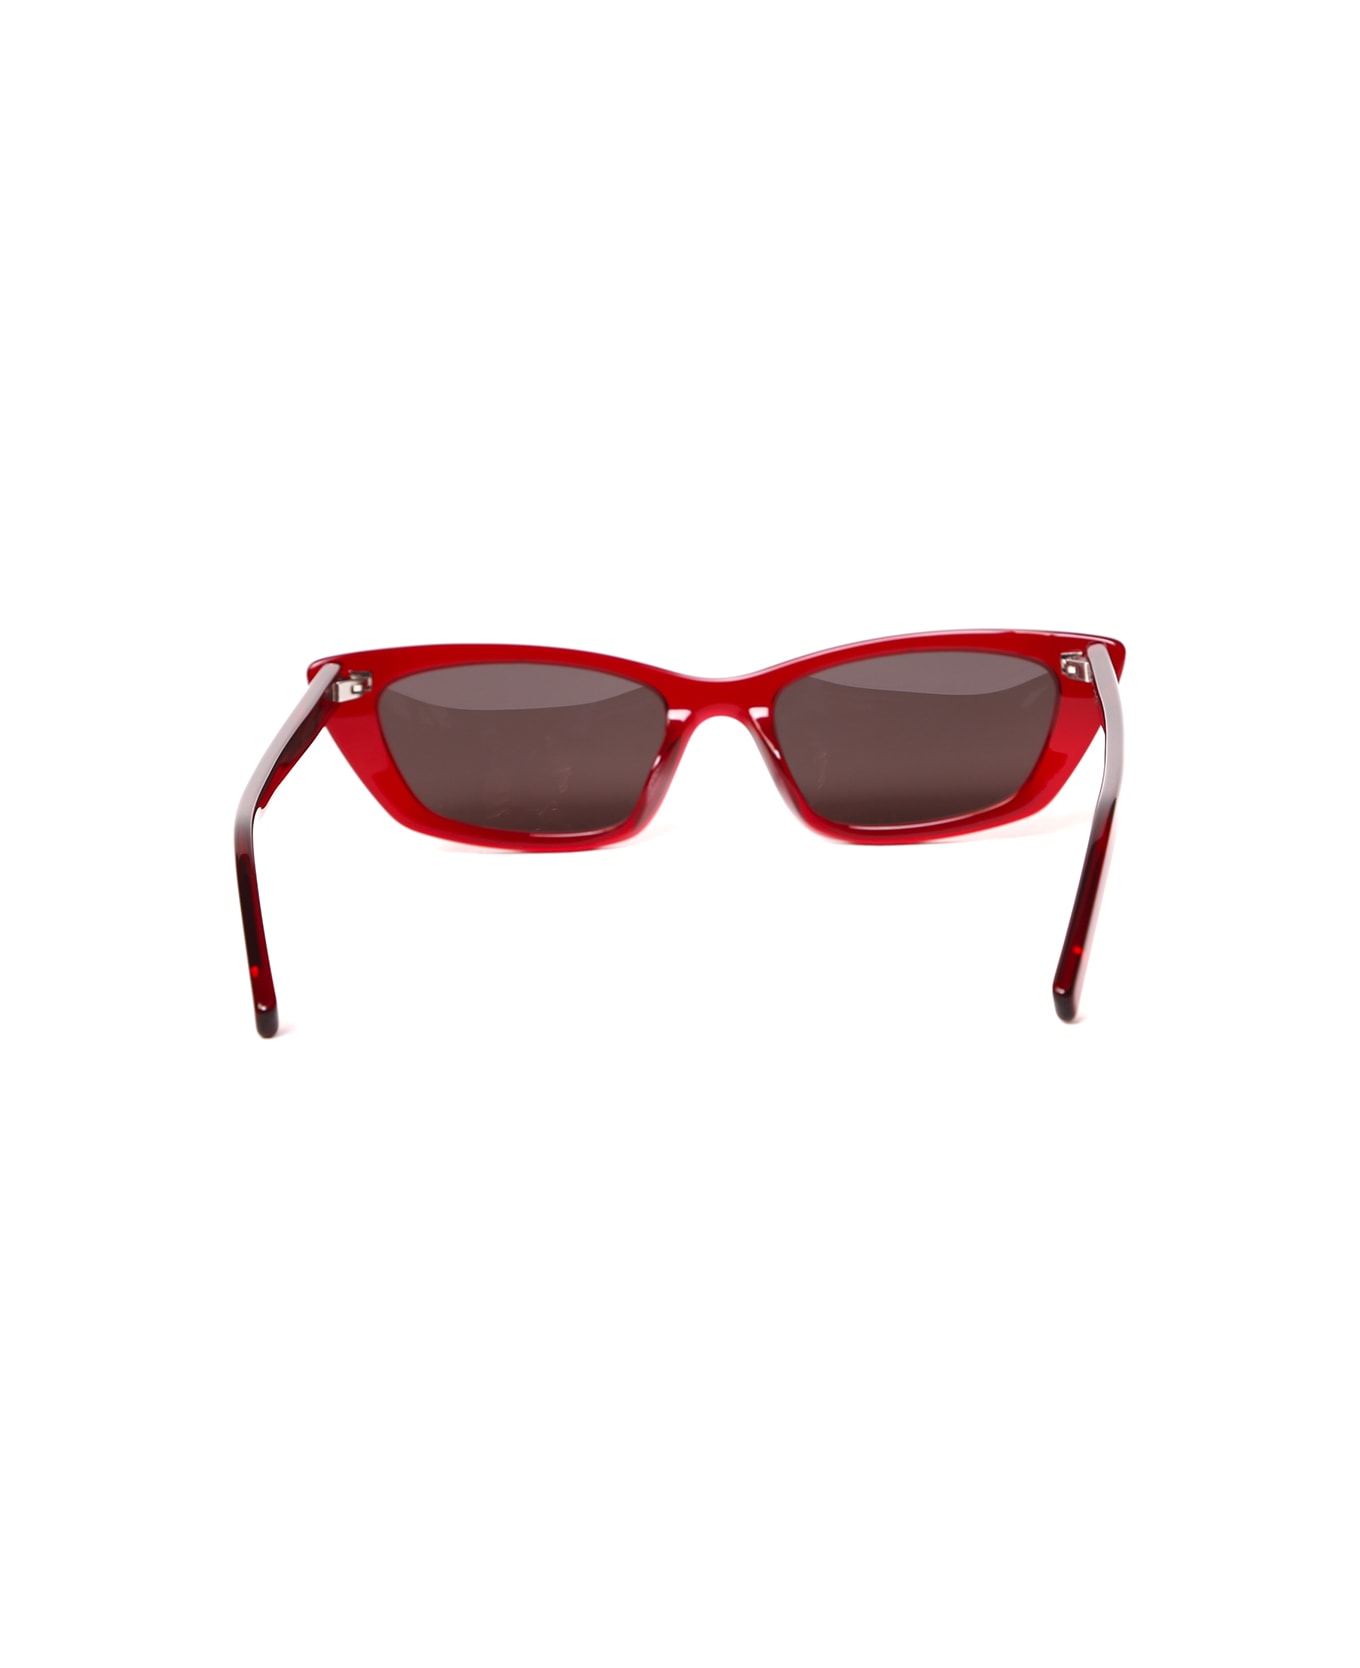 Saint Laurent Eyewear Red Acetate Cat-eye Sunglasses - Red